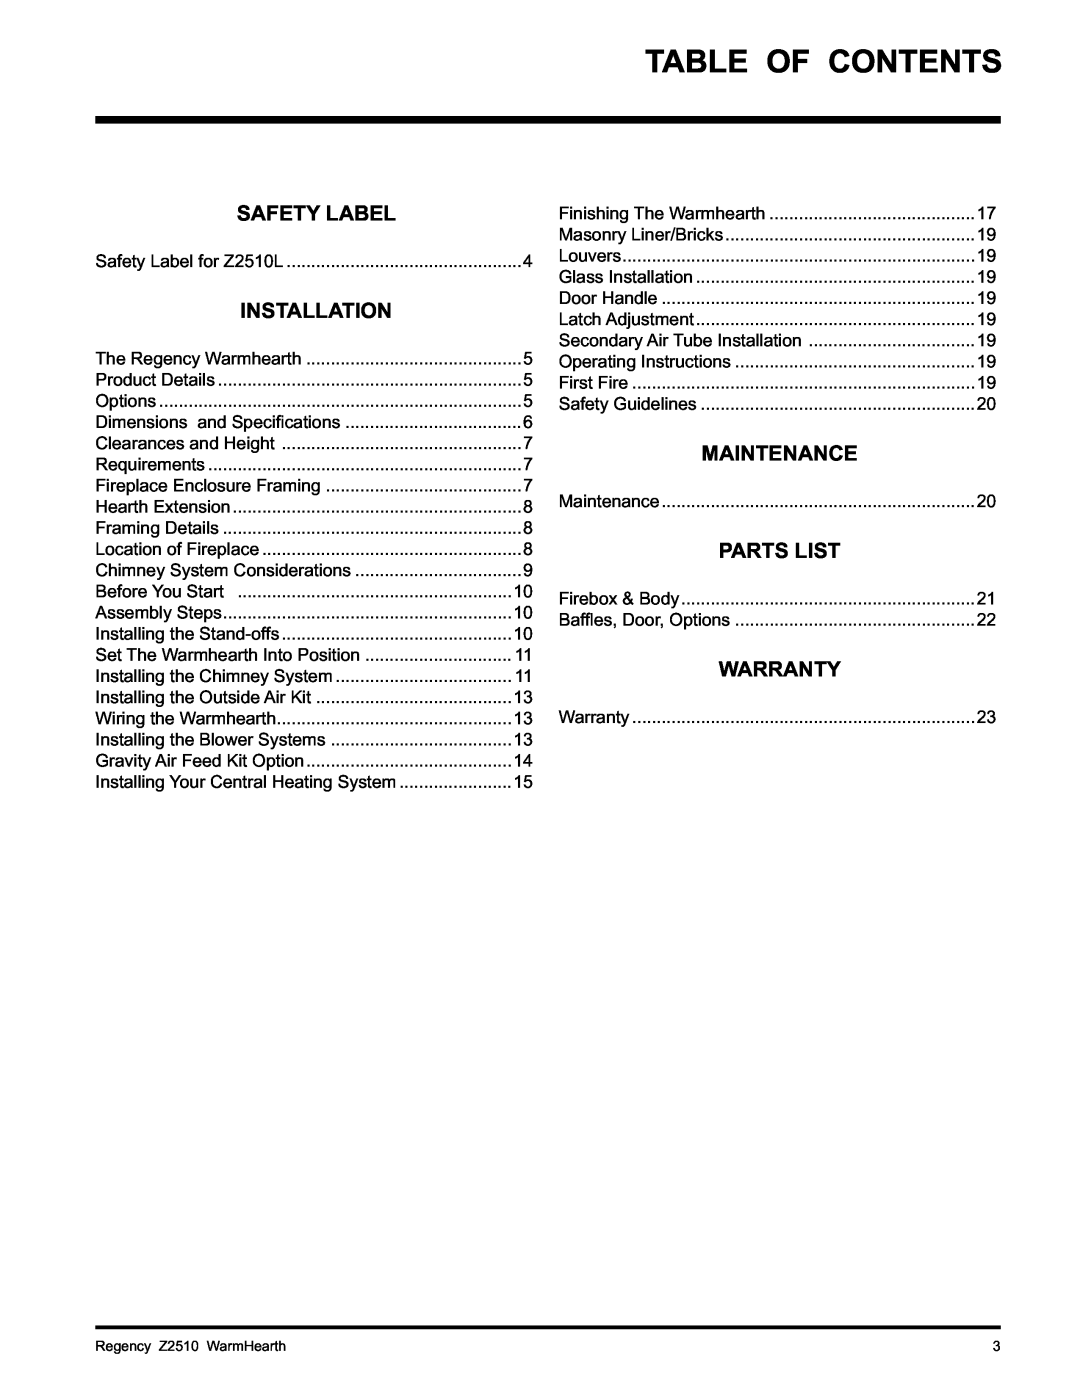 Regency Z2510L installation manual Table Of Contents, Safety Label, Installation, Maintenance, Parts List, Warranty 